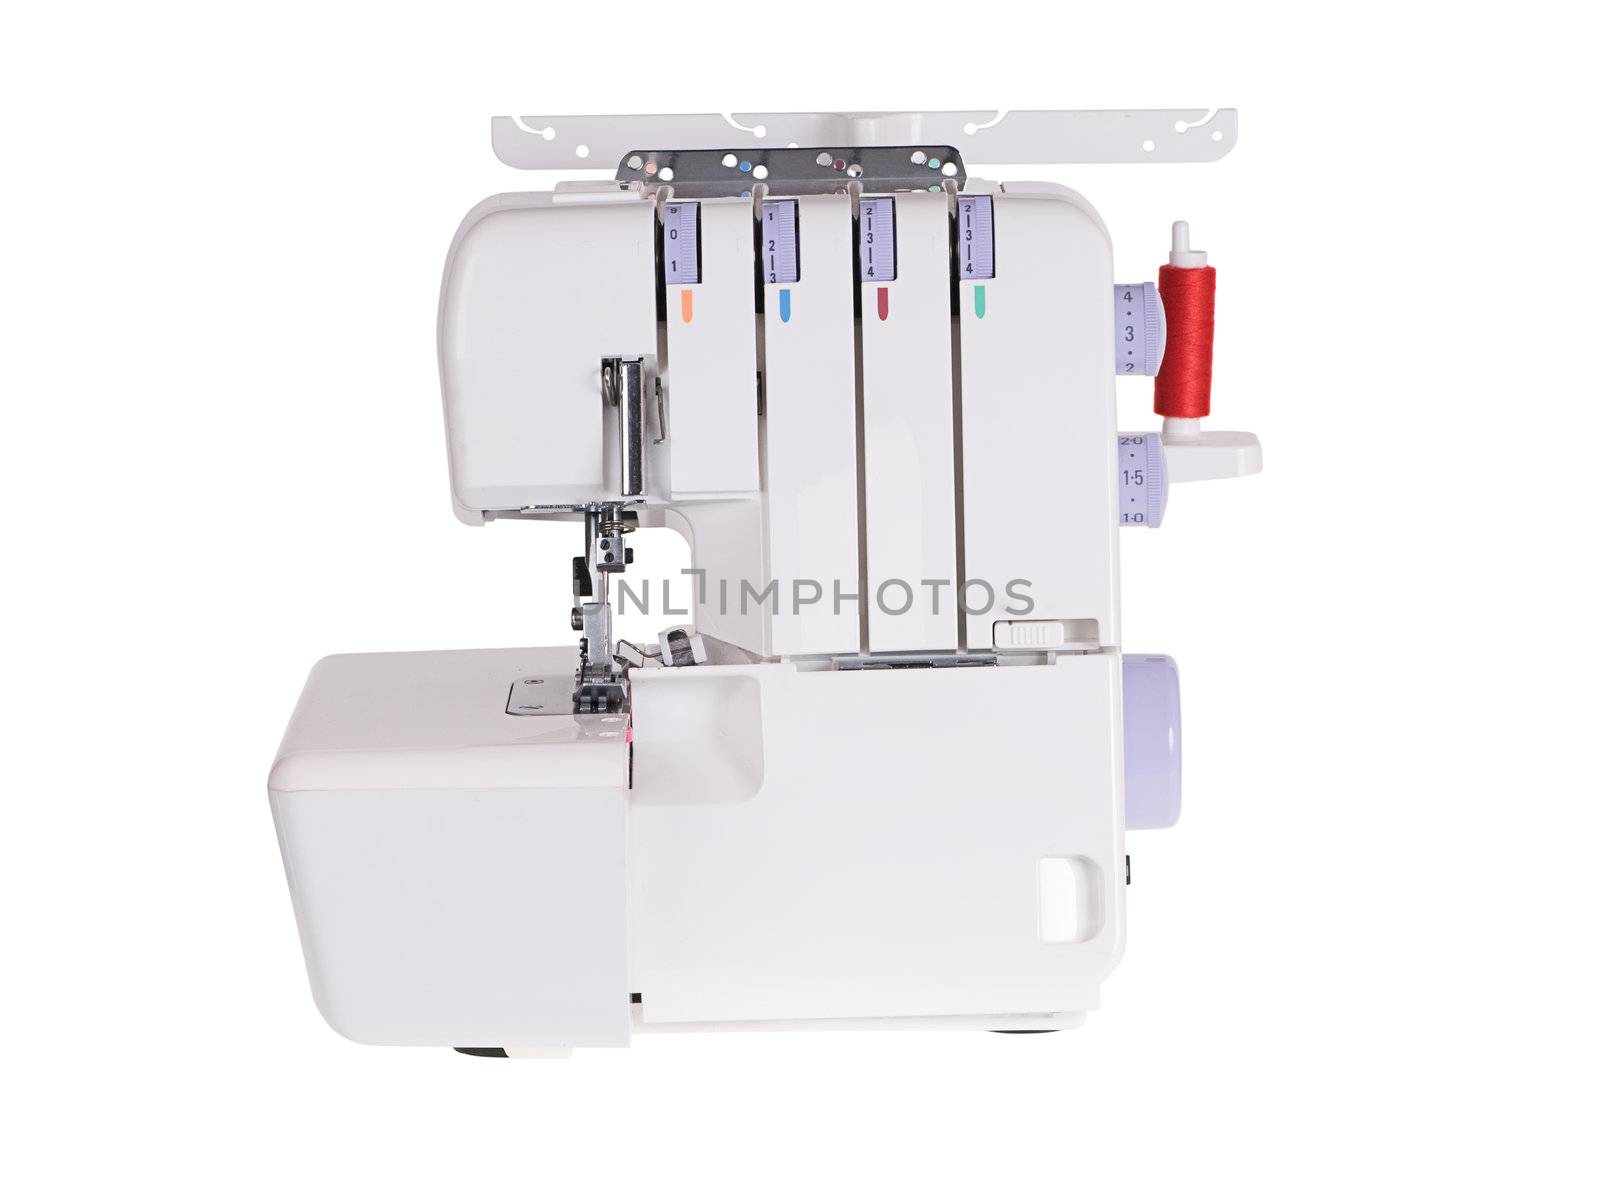 white sewing machine isolated on white background